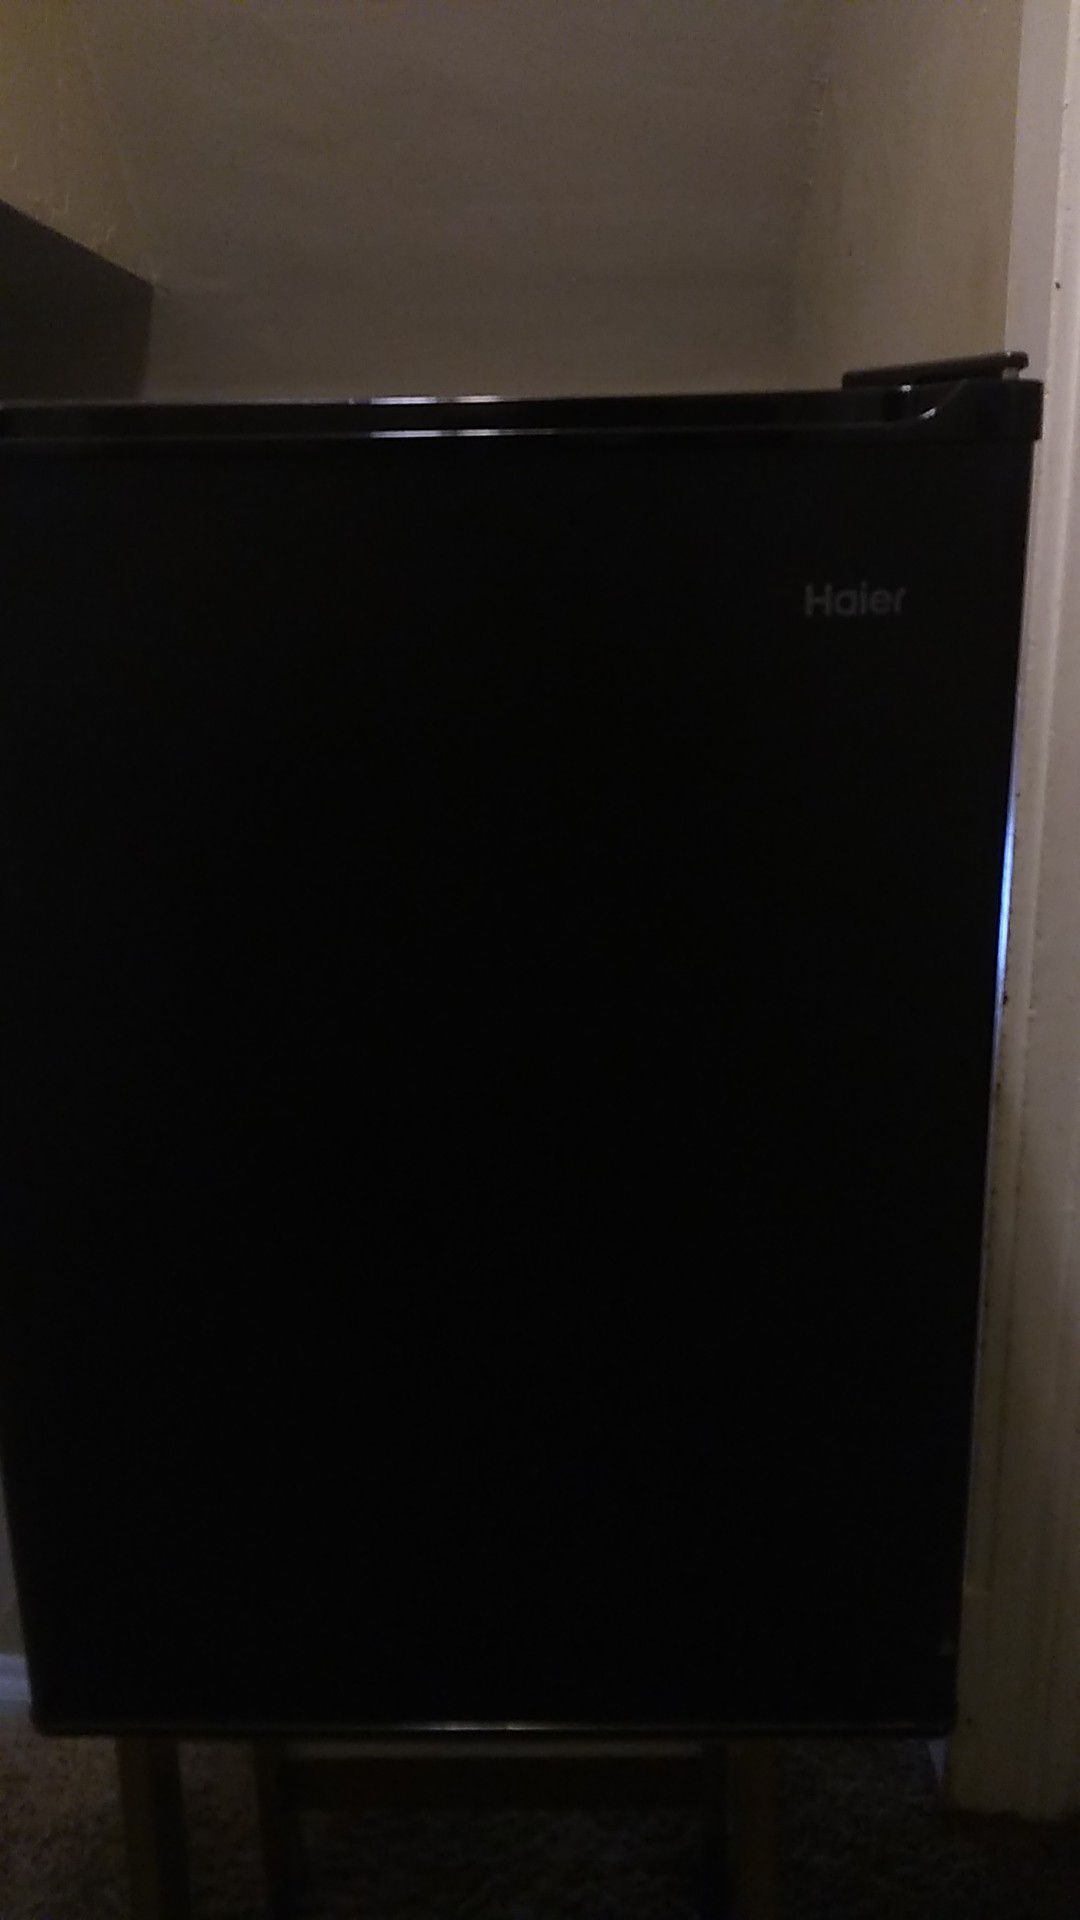 Haier mini black fridge